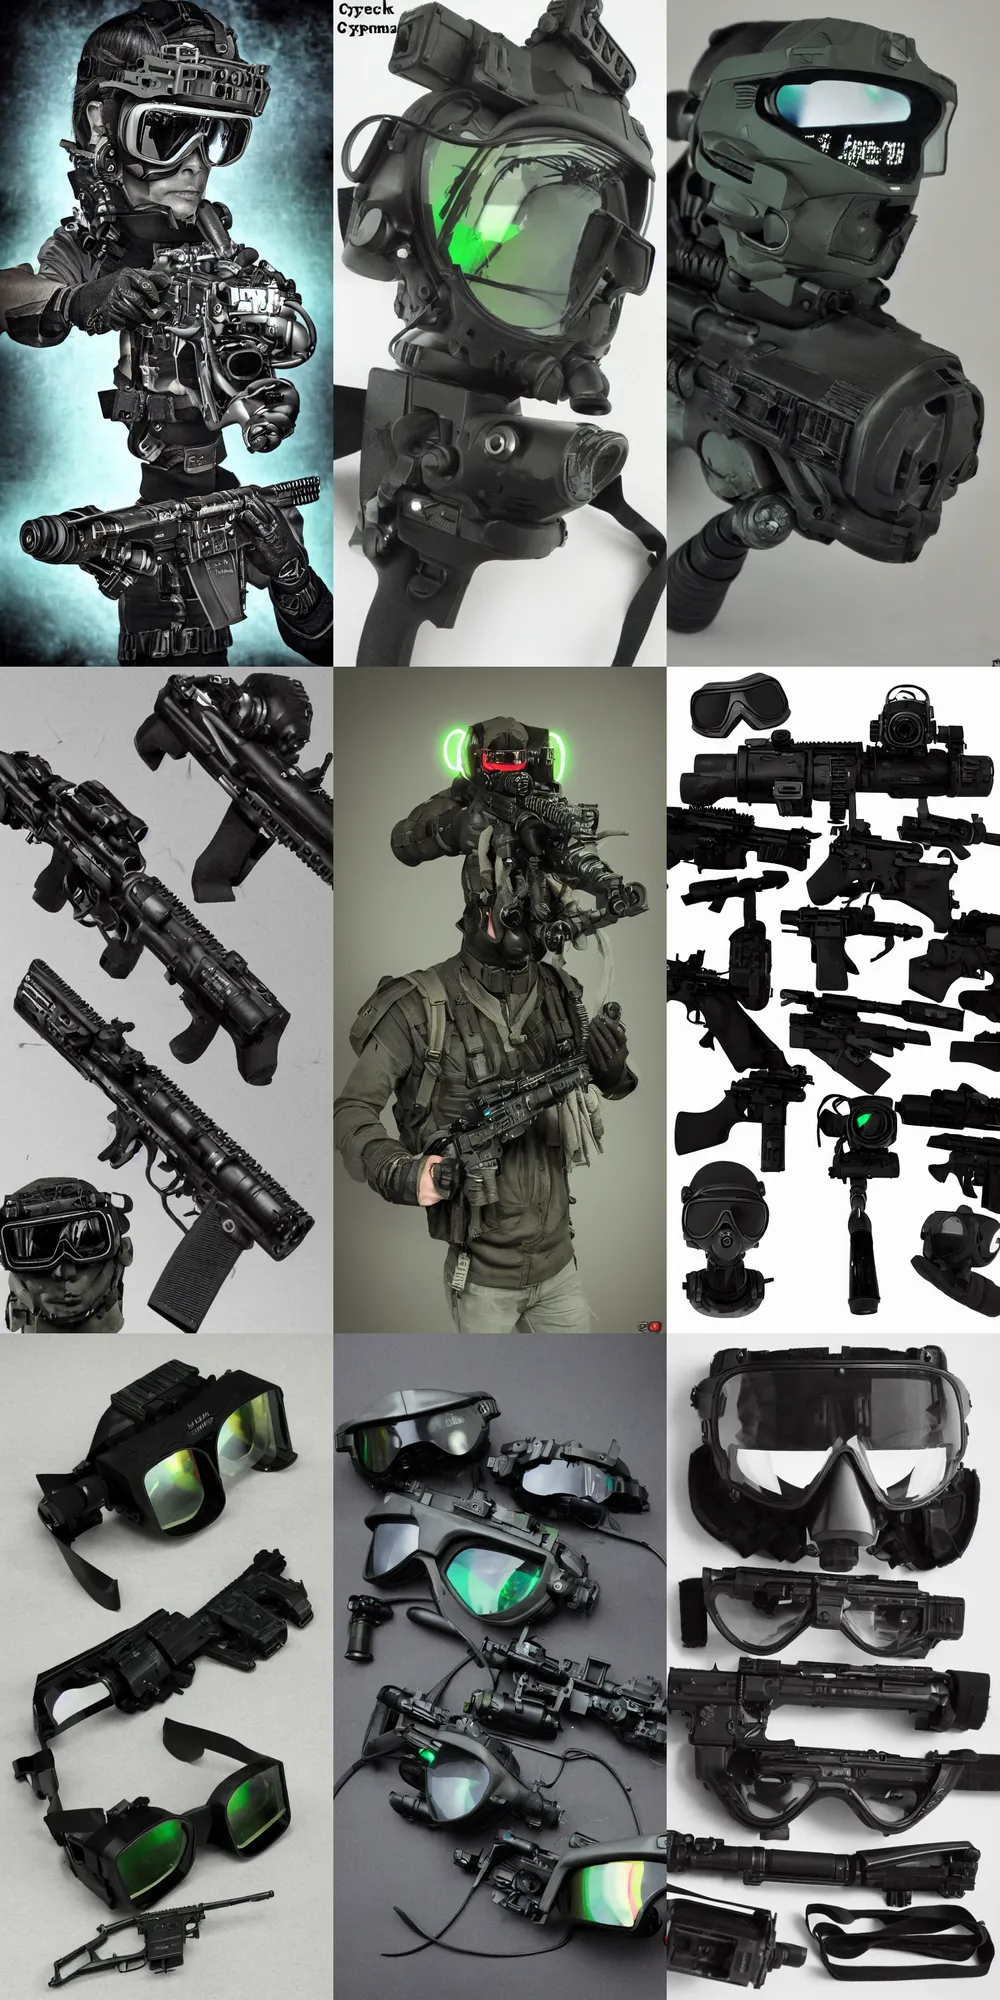 Prompt: cyperpunk special ops commander, night vision googles, futuristic gun